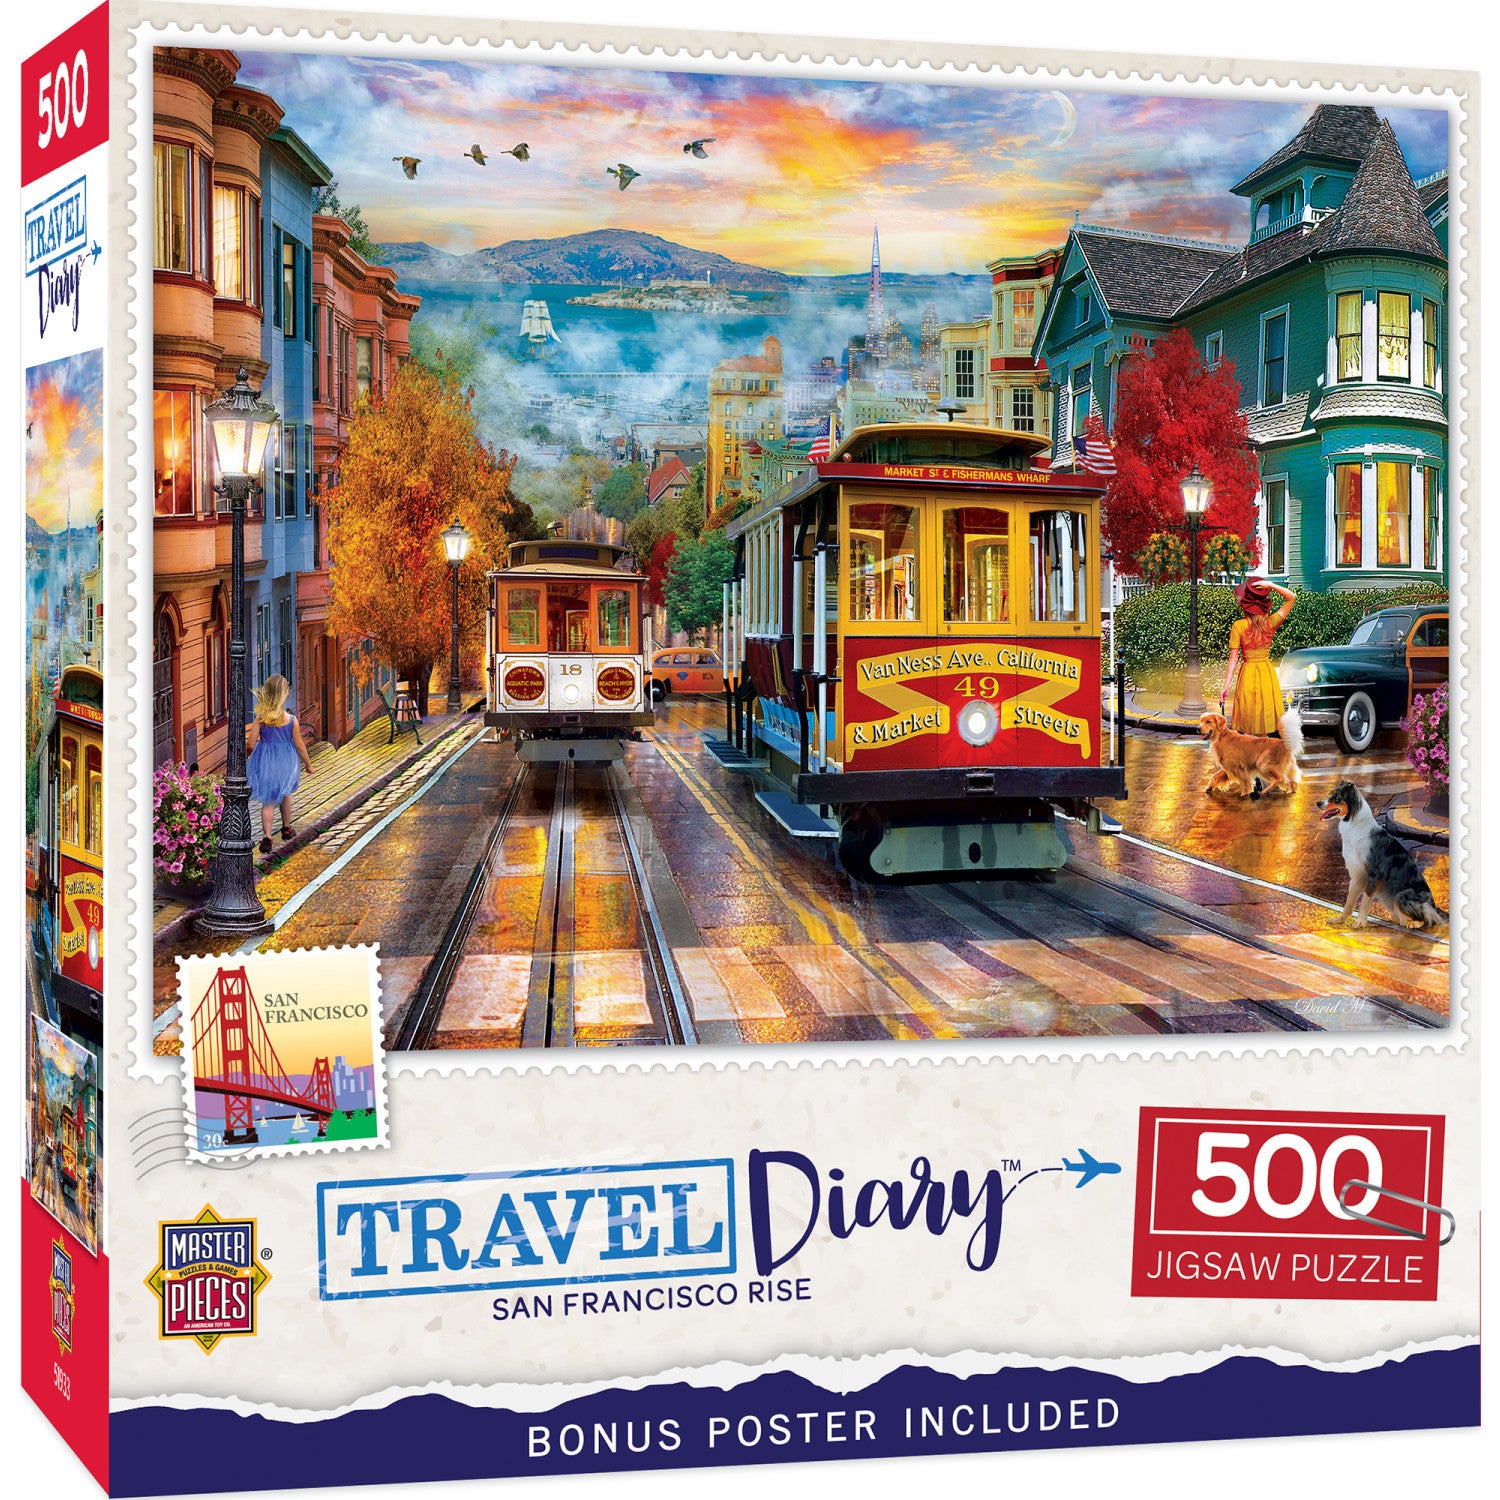 Travel Diary - San Francisco Rise 500 Piece Jigsaw Puzzle